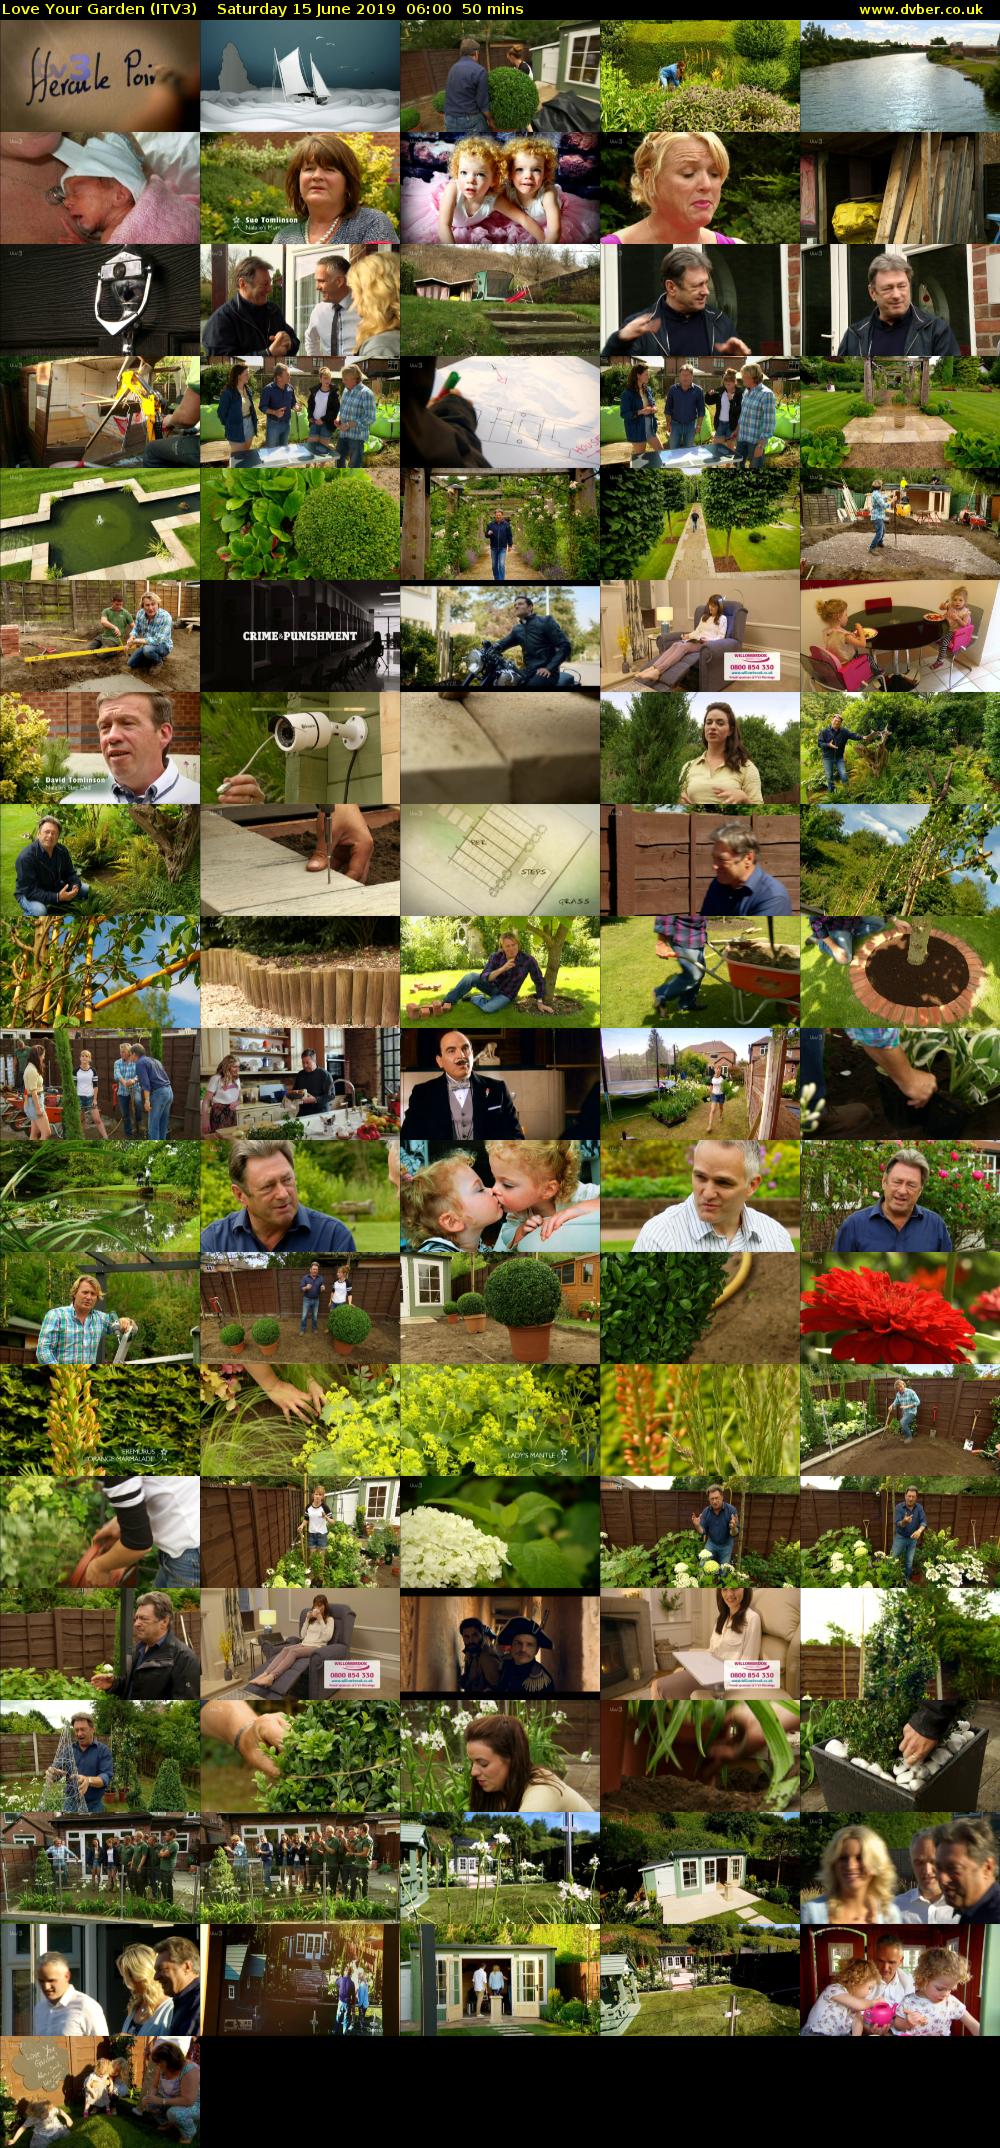 Love Your Garden (ITV3) Saturday 15 June 2019 06:00 - 06:50